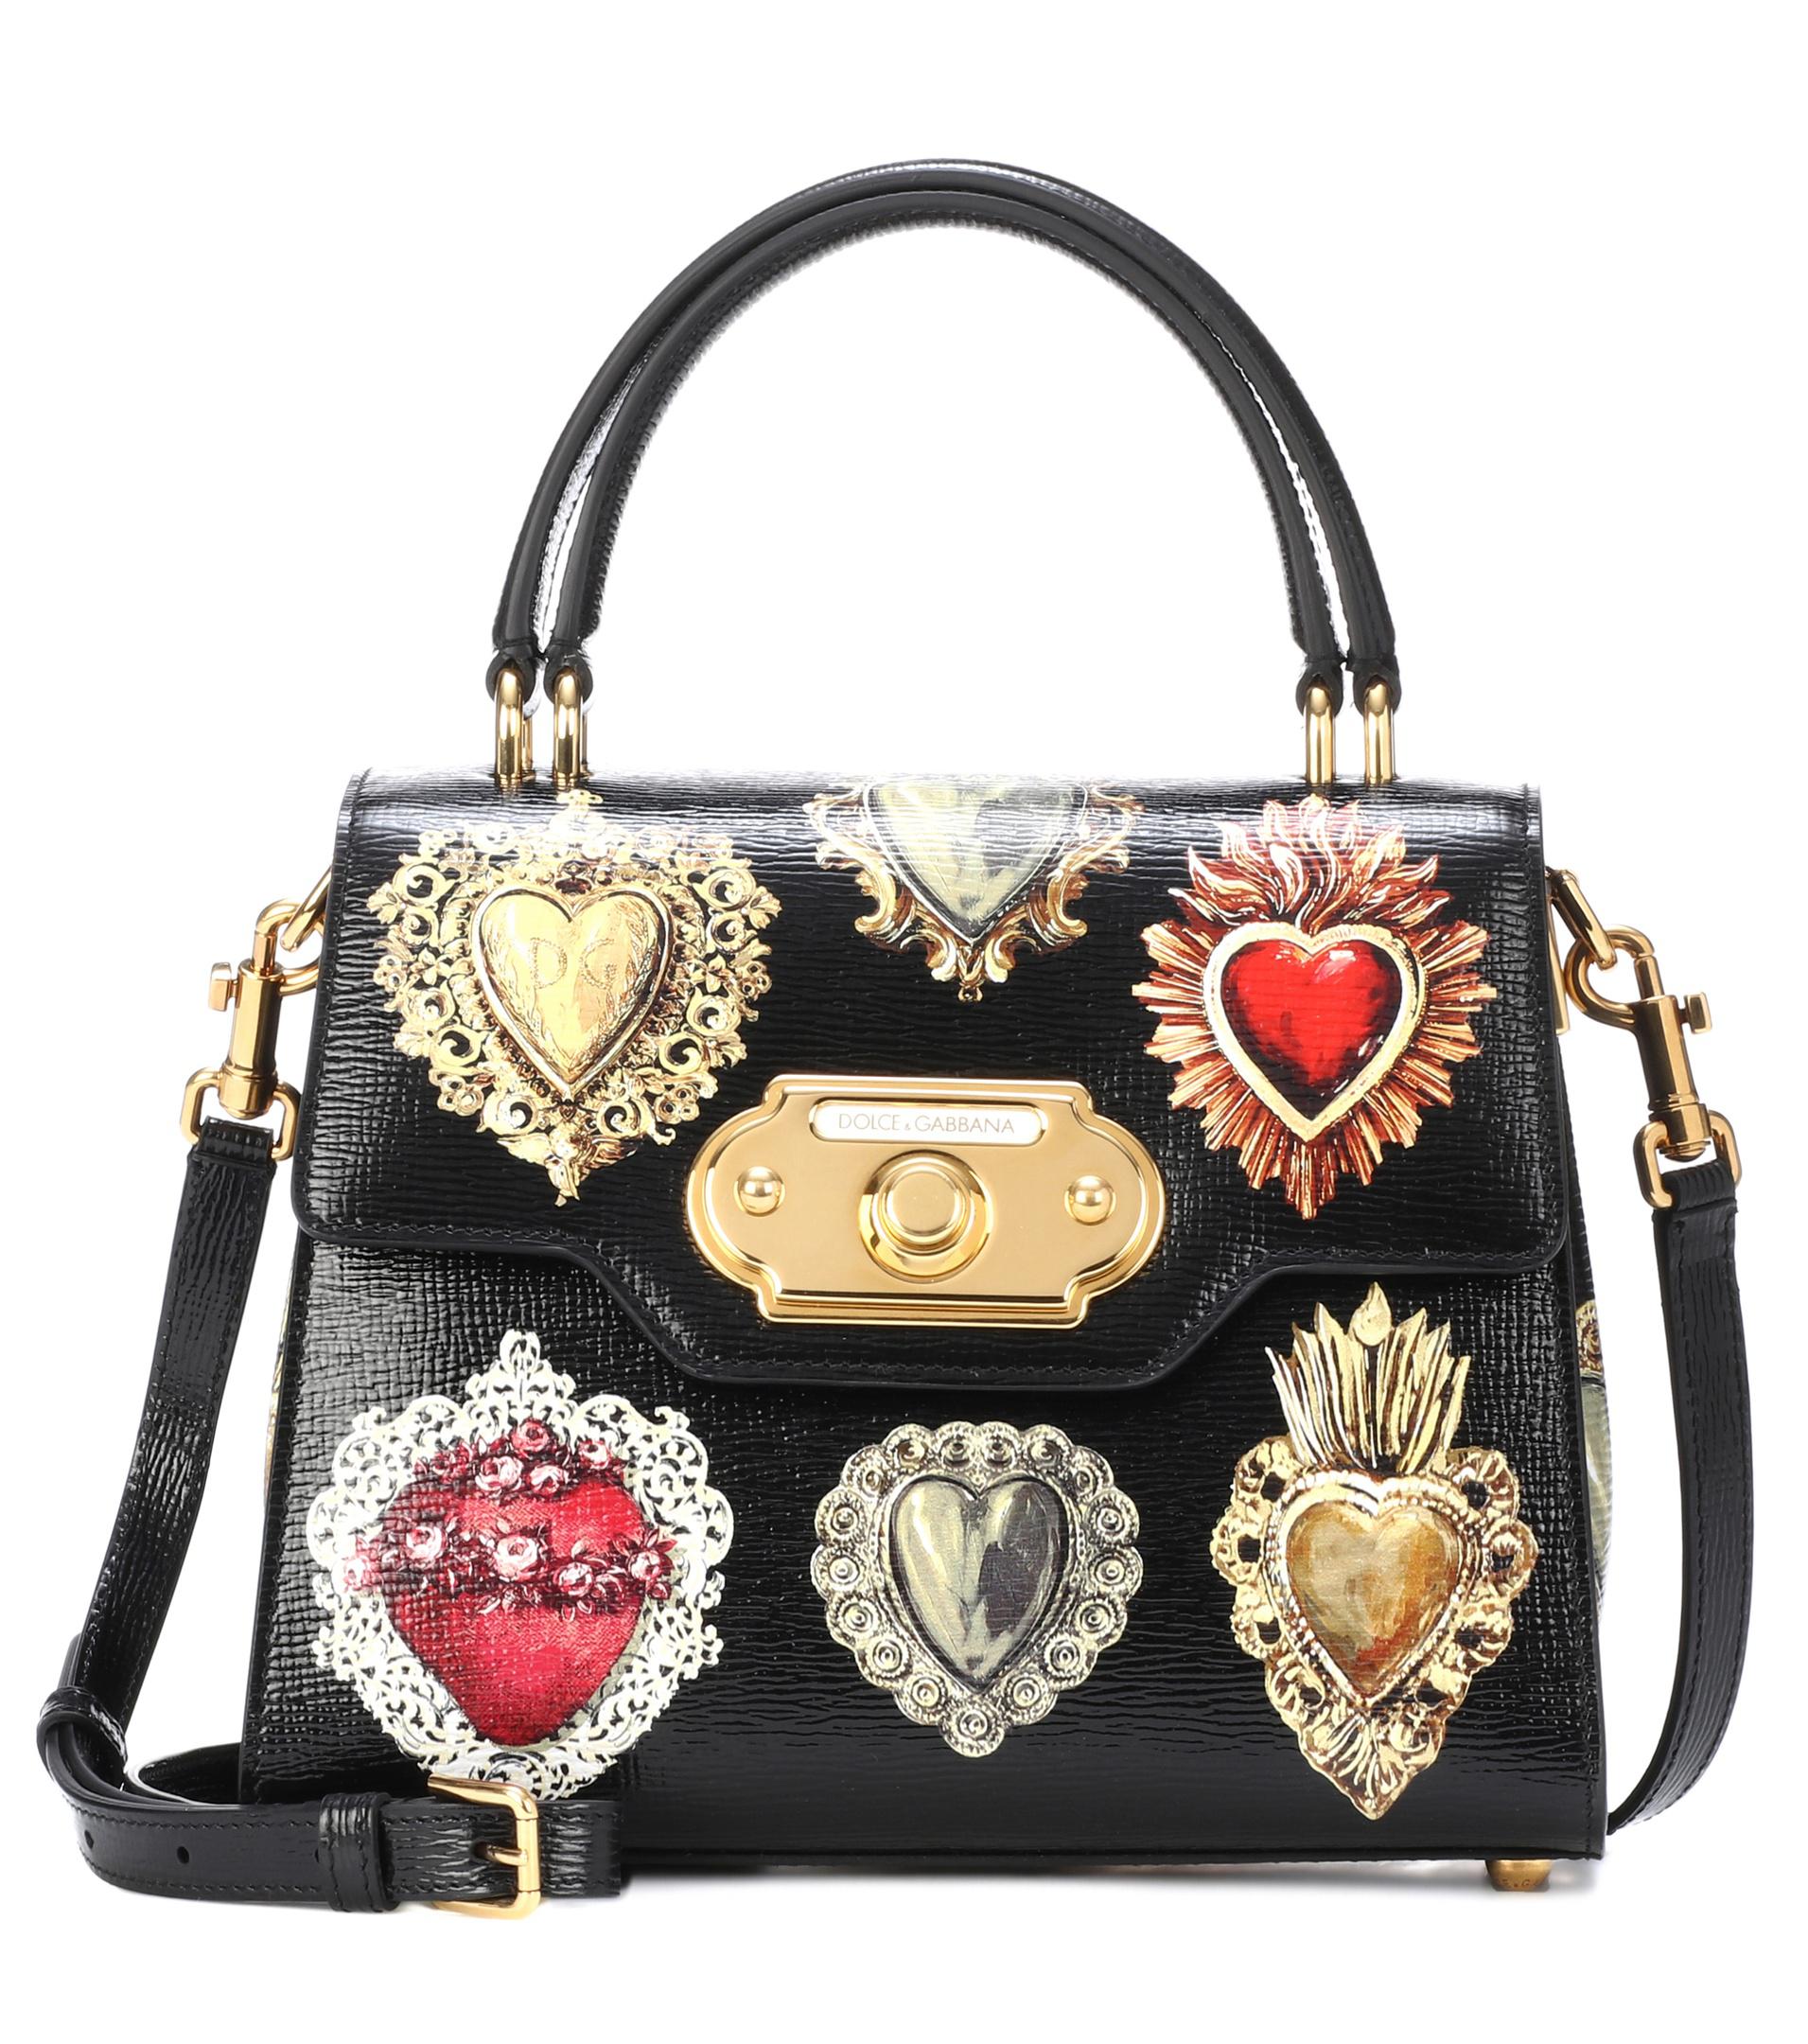 Dolce & Gabbana Welcome Leather Shoulder Bag in Black - Lyst